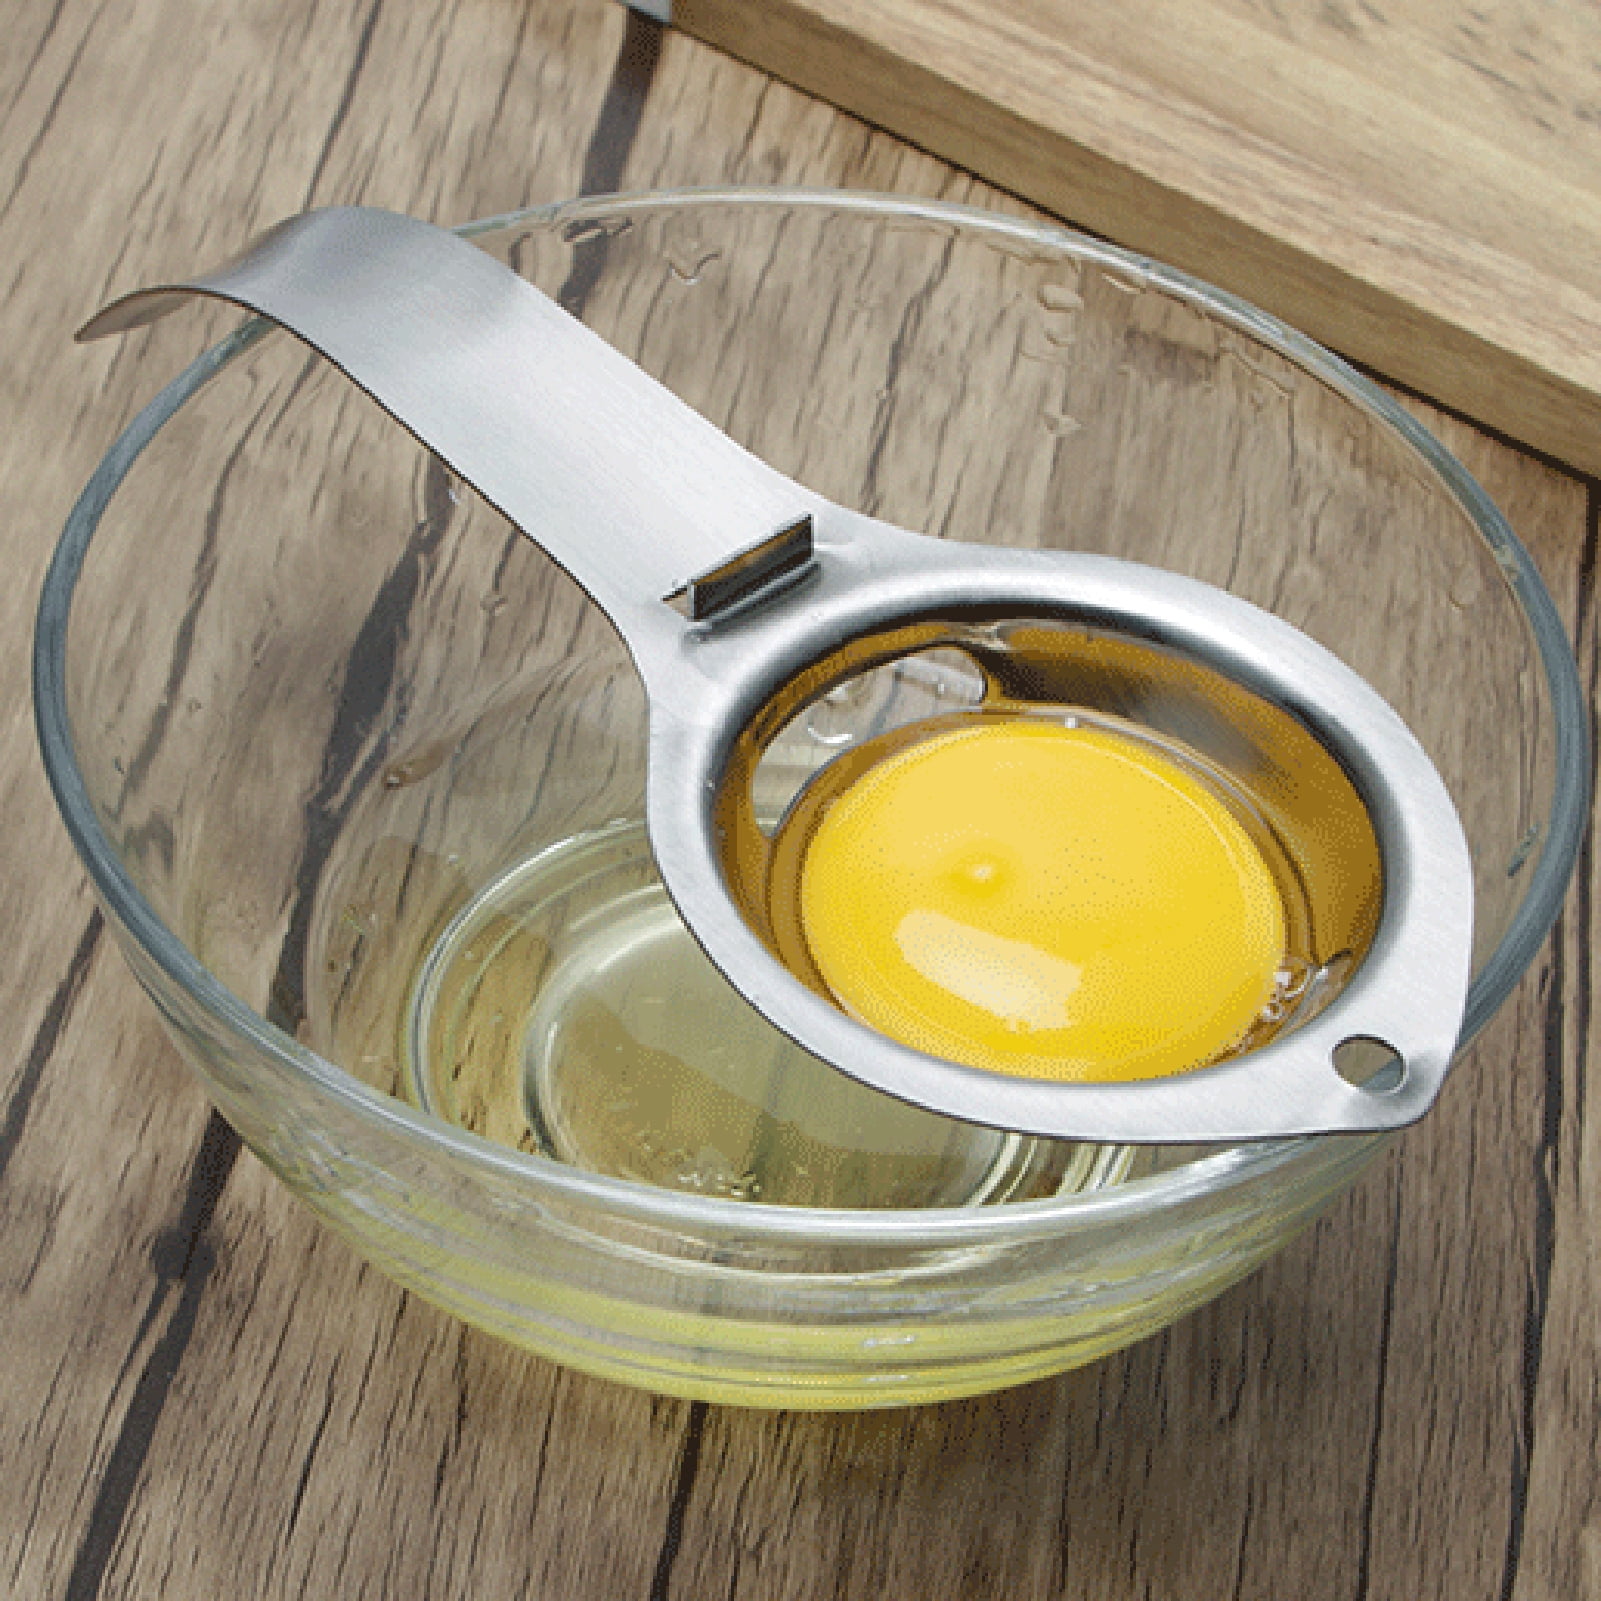 Insuwun Ceramic Eggs White Yolk Separator Separate Egg Yolk from Egg White Home Garden Kitchen Cooking Baker Tool Accessories 